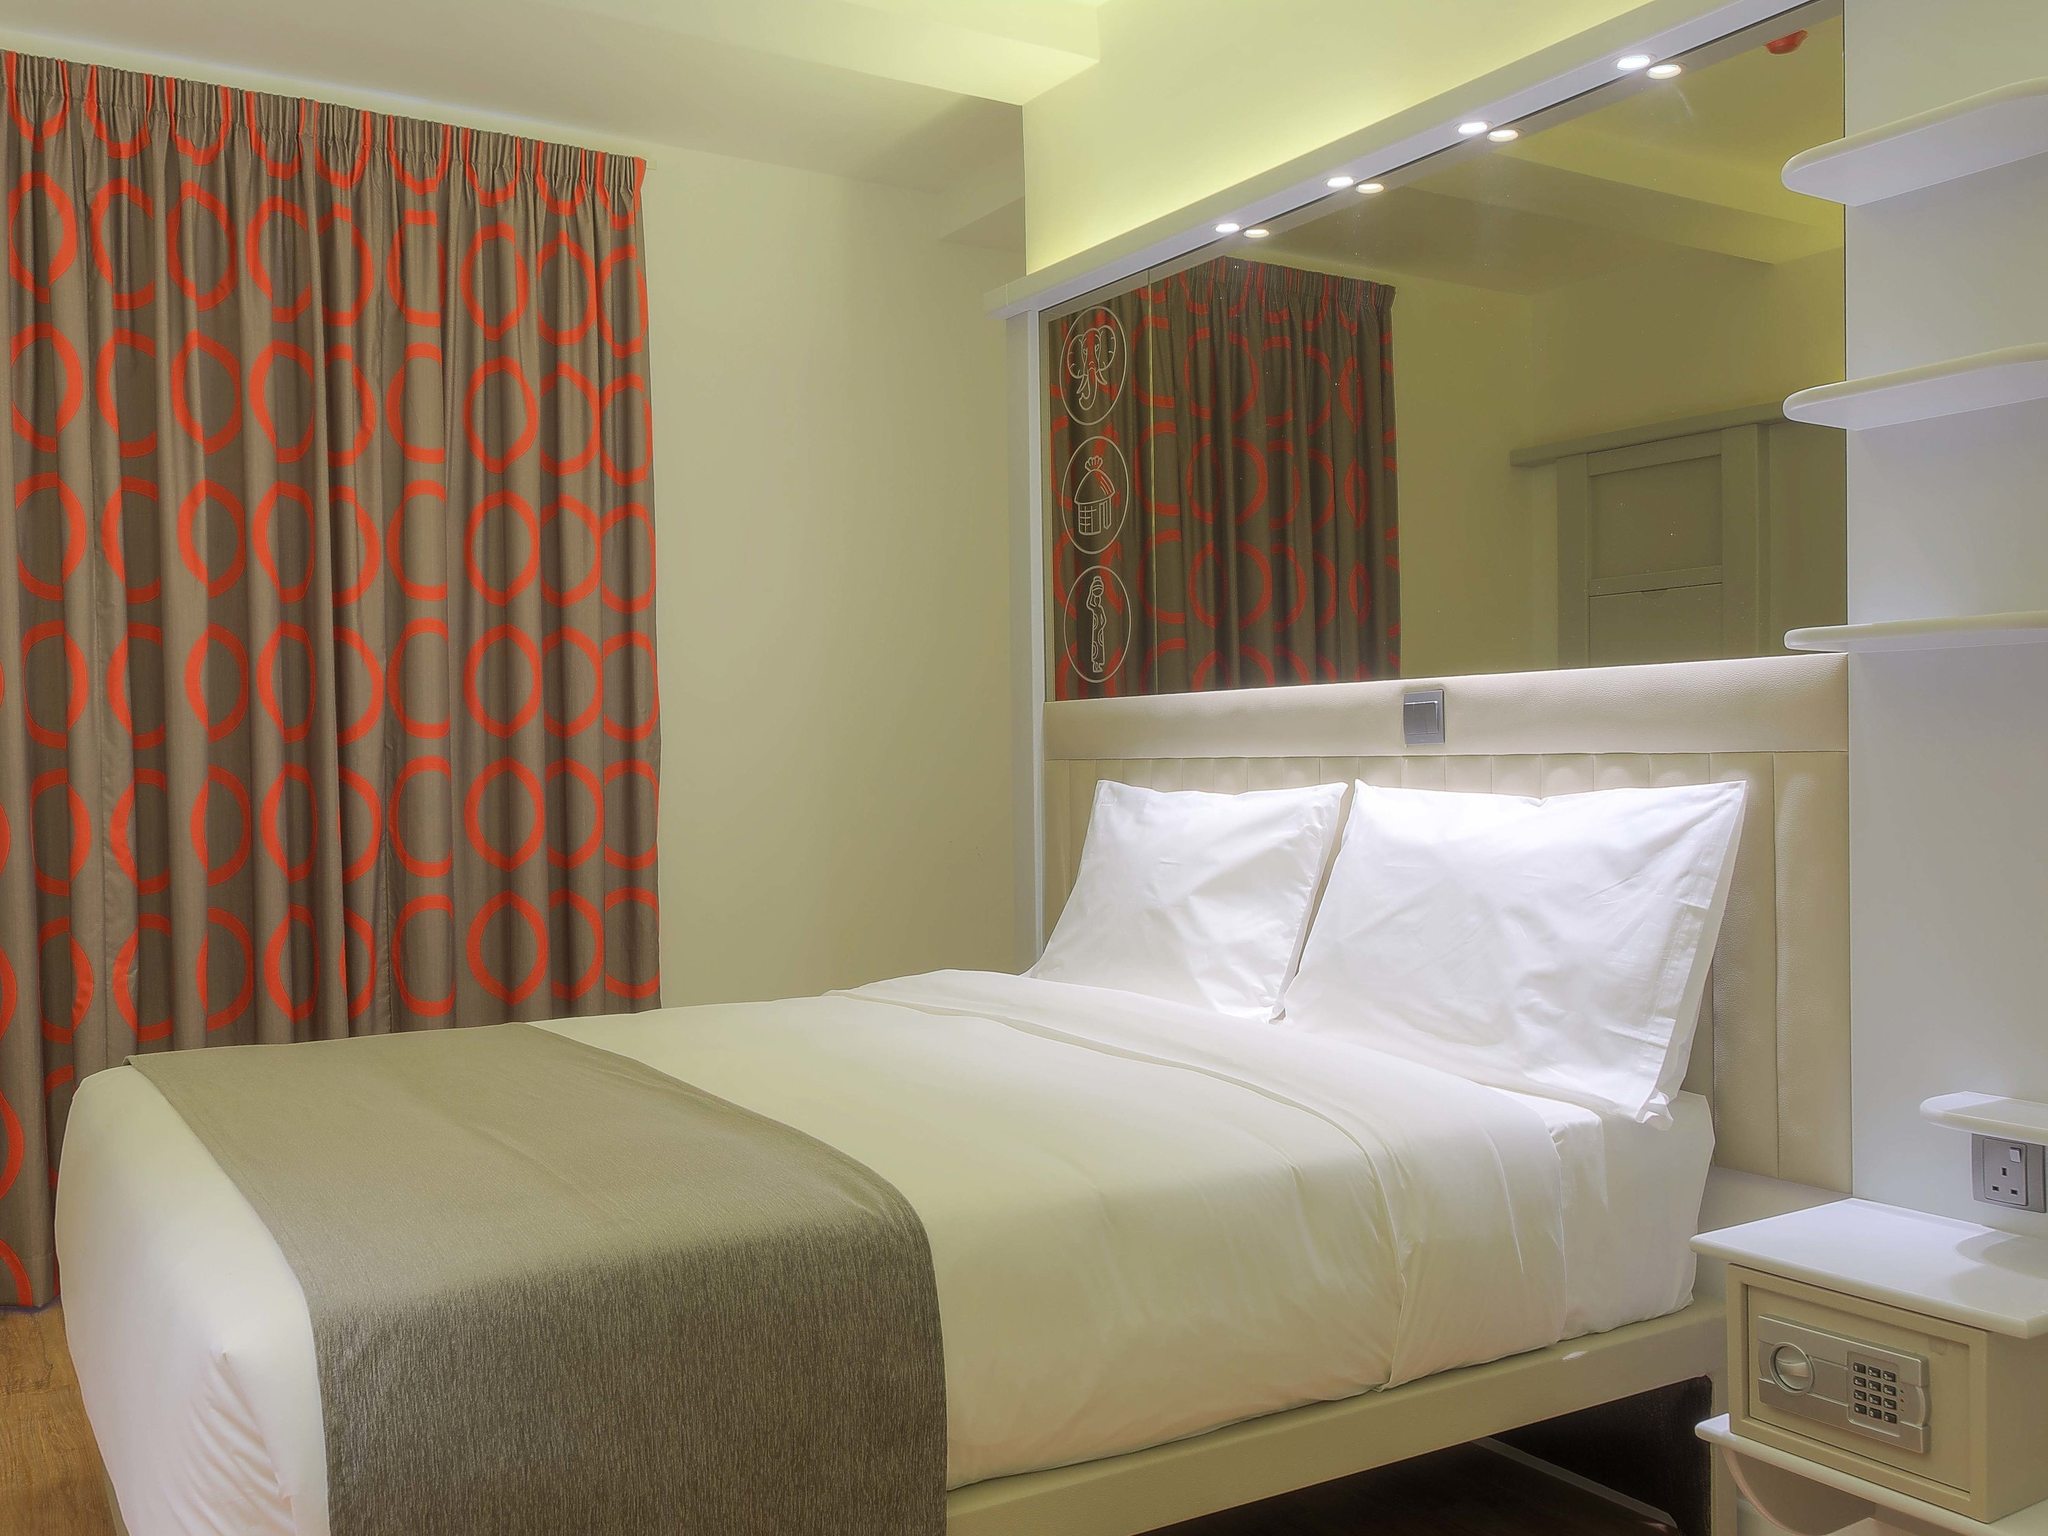 Best hotels in nairobi